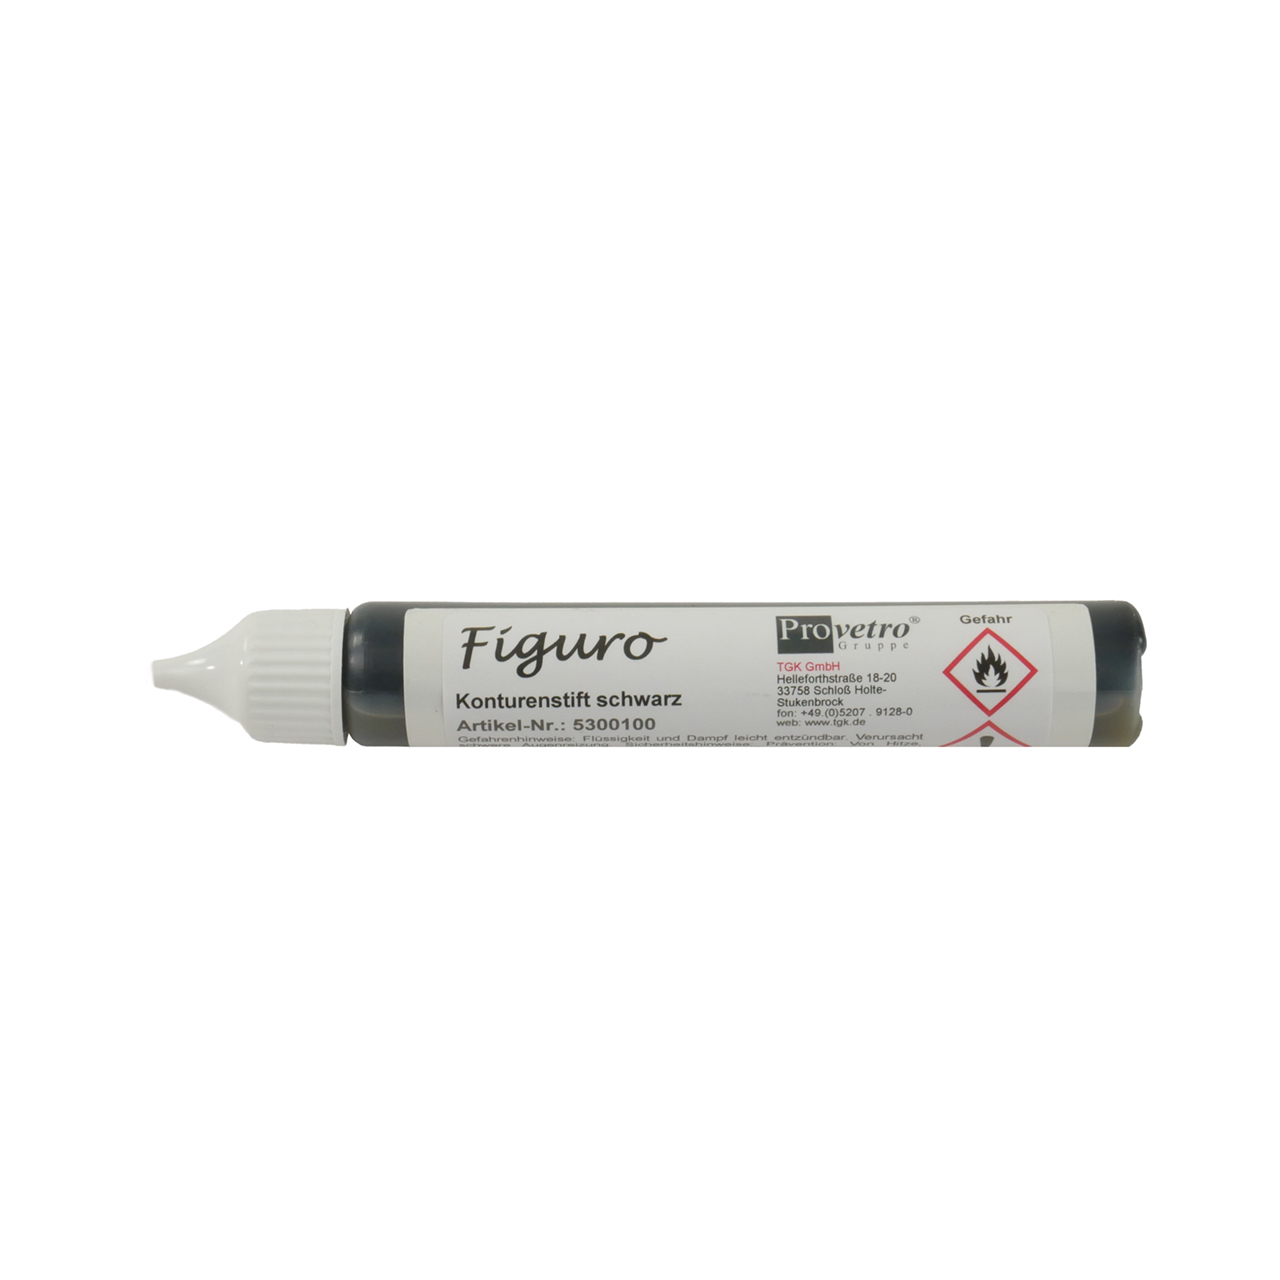 FIGURO contour line pen black